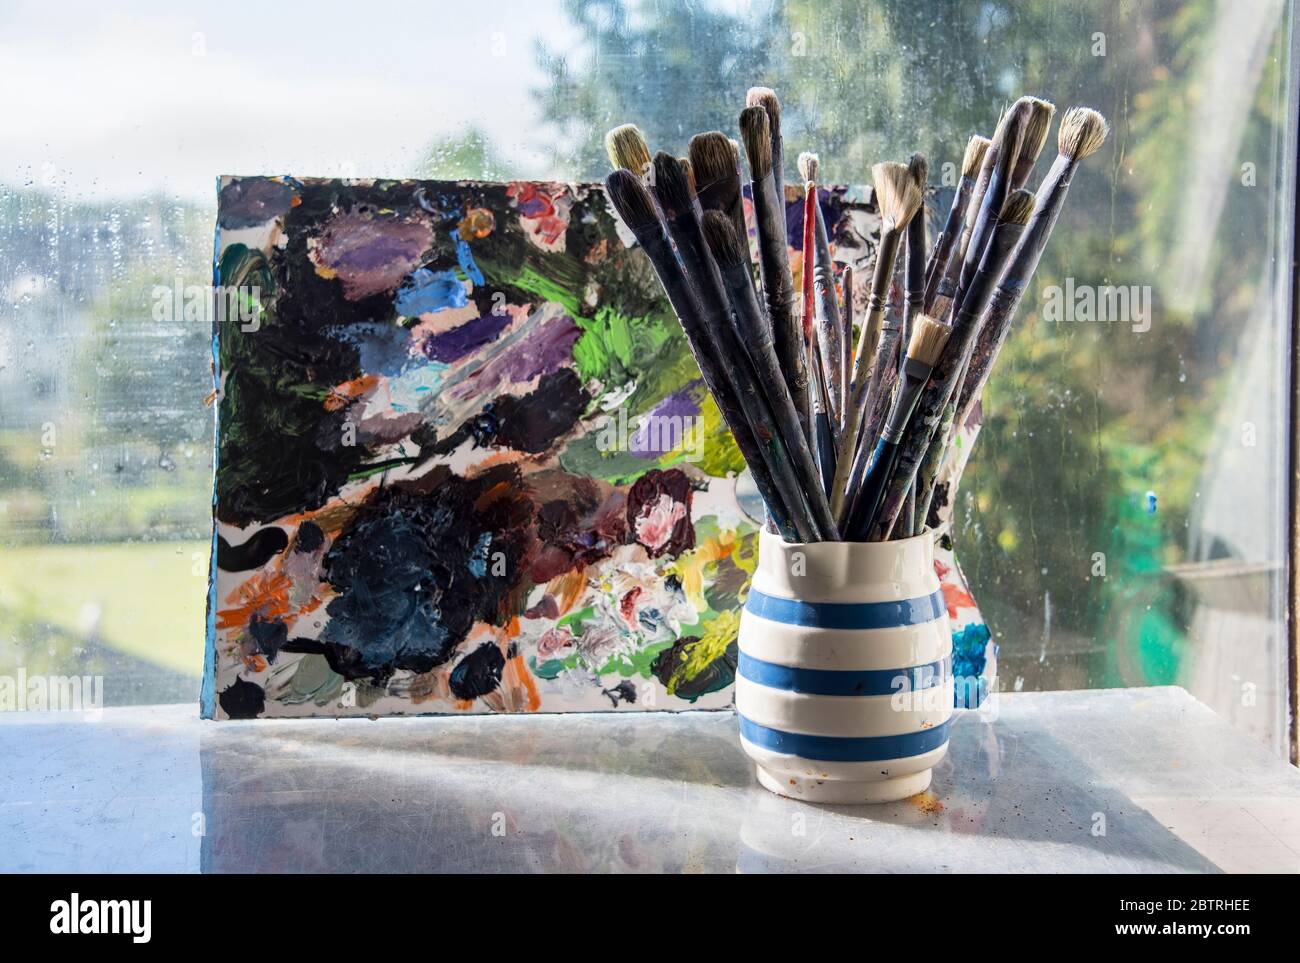 Art materials in an artists's studio. Stock Photo